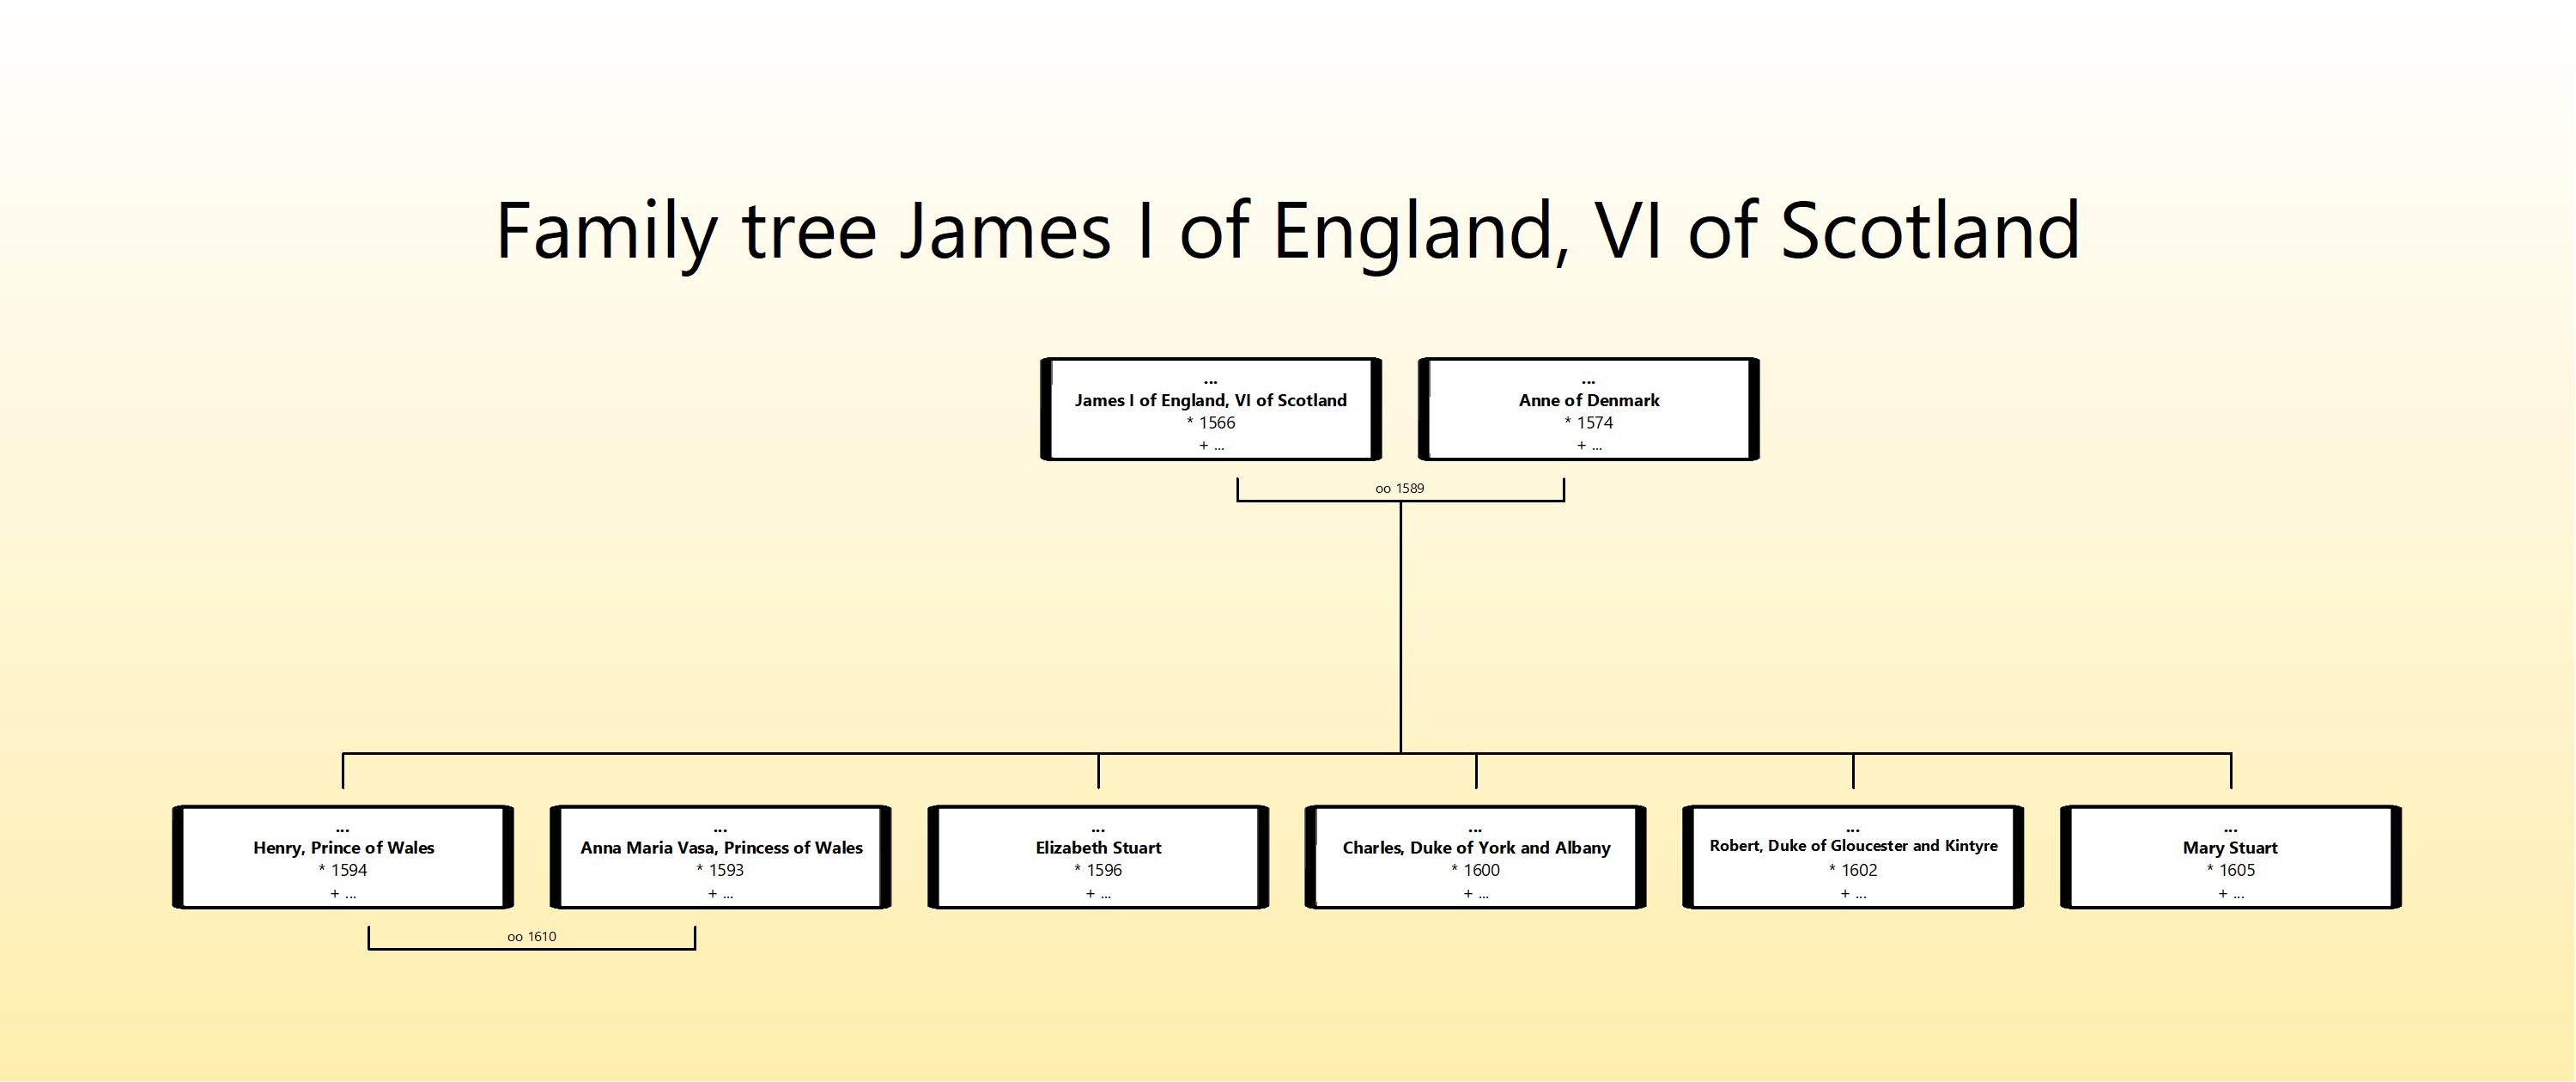 Family tree James I of England, VI of Scotland.jpg